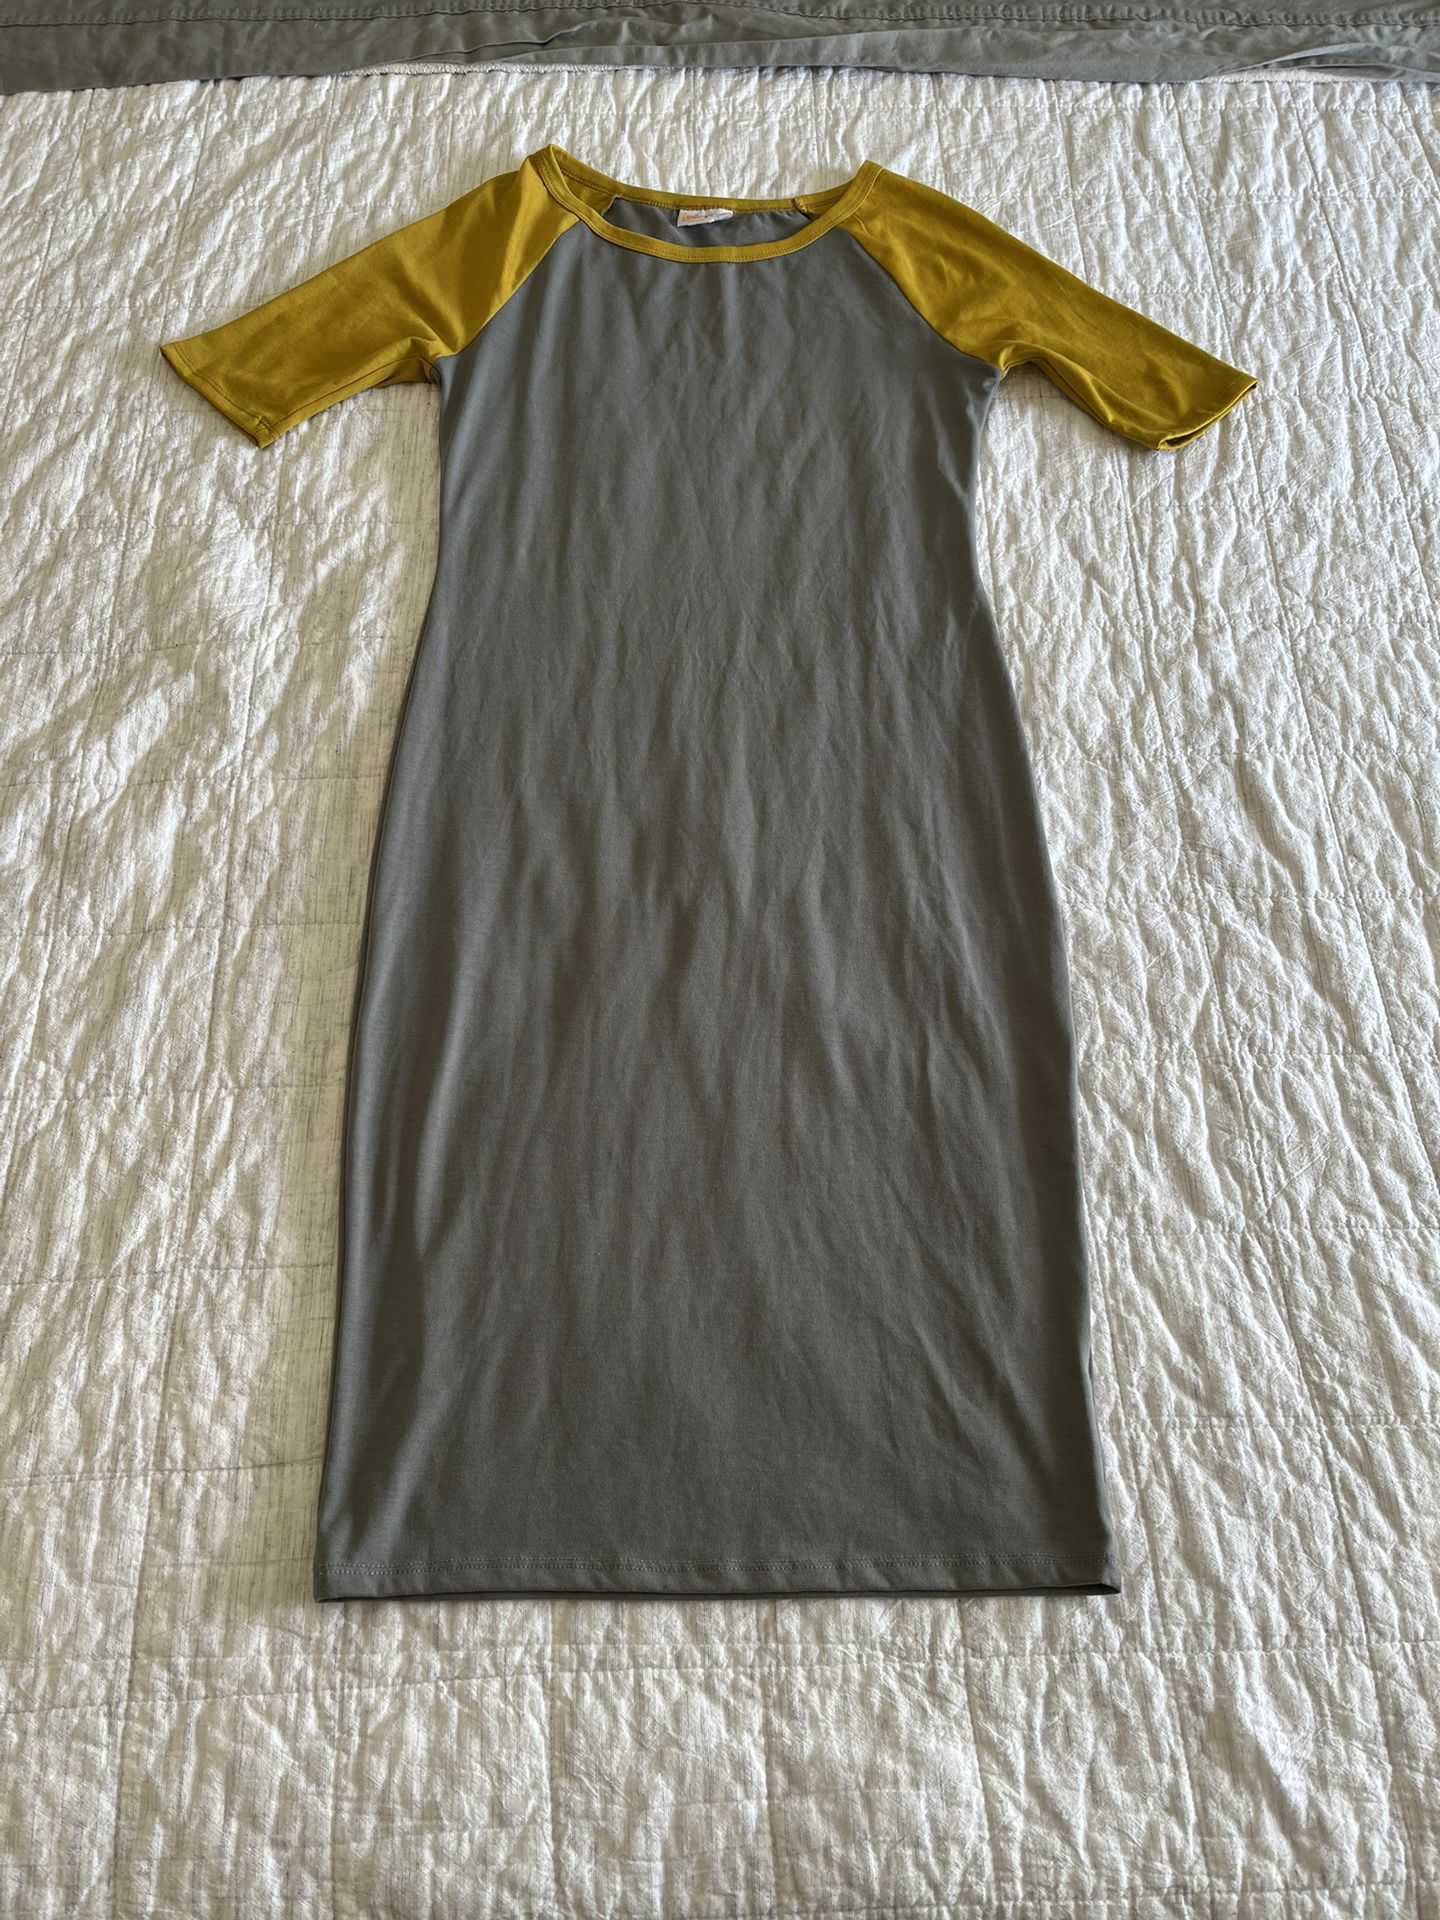 Lularoe Casual Dress